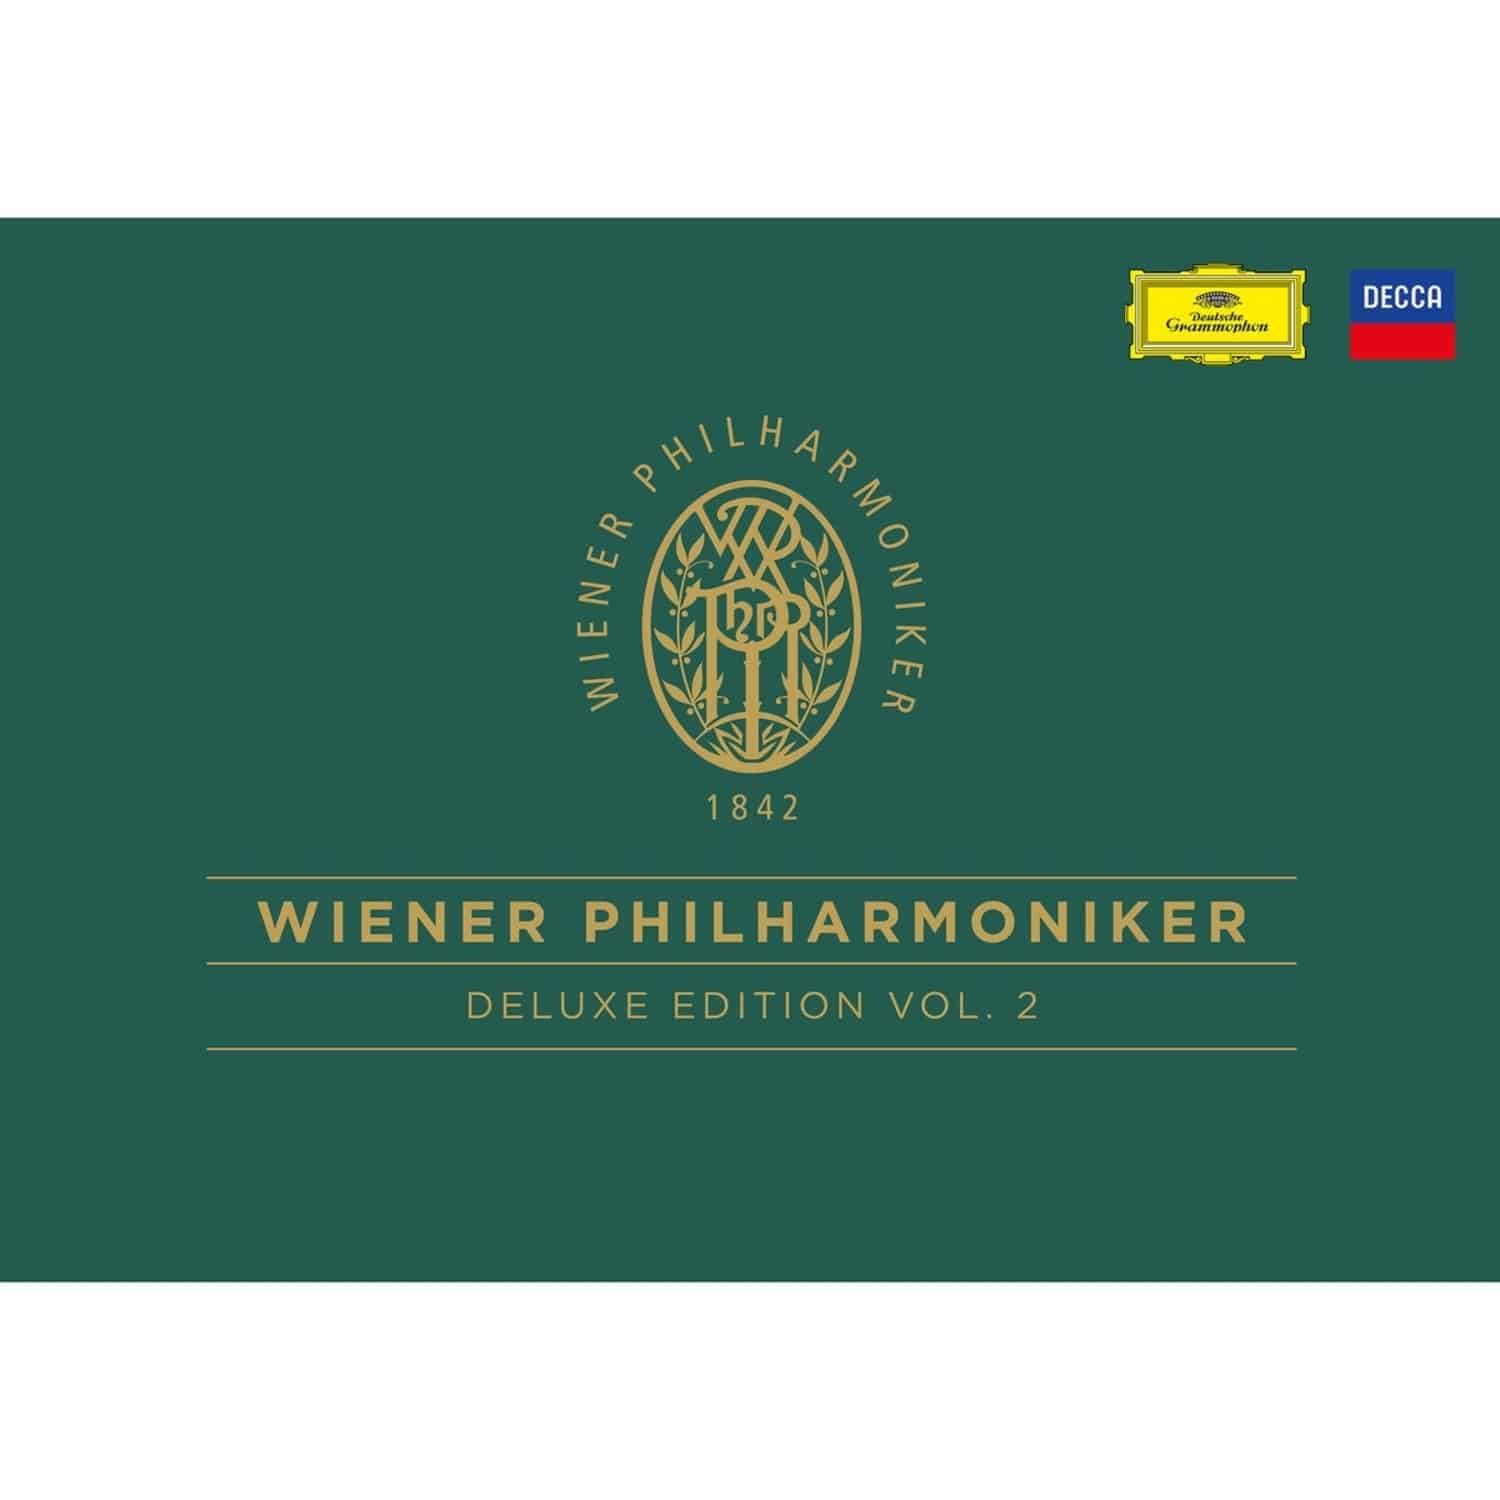 Wiener Philharmoniker - DELUXE EDITION VOL. 2 